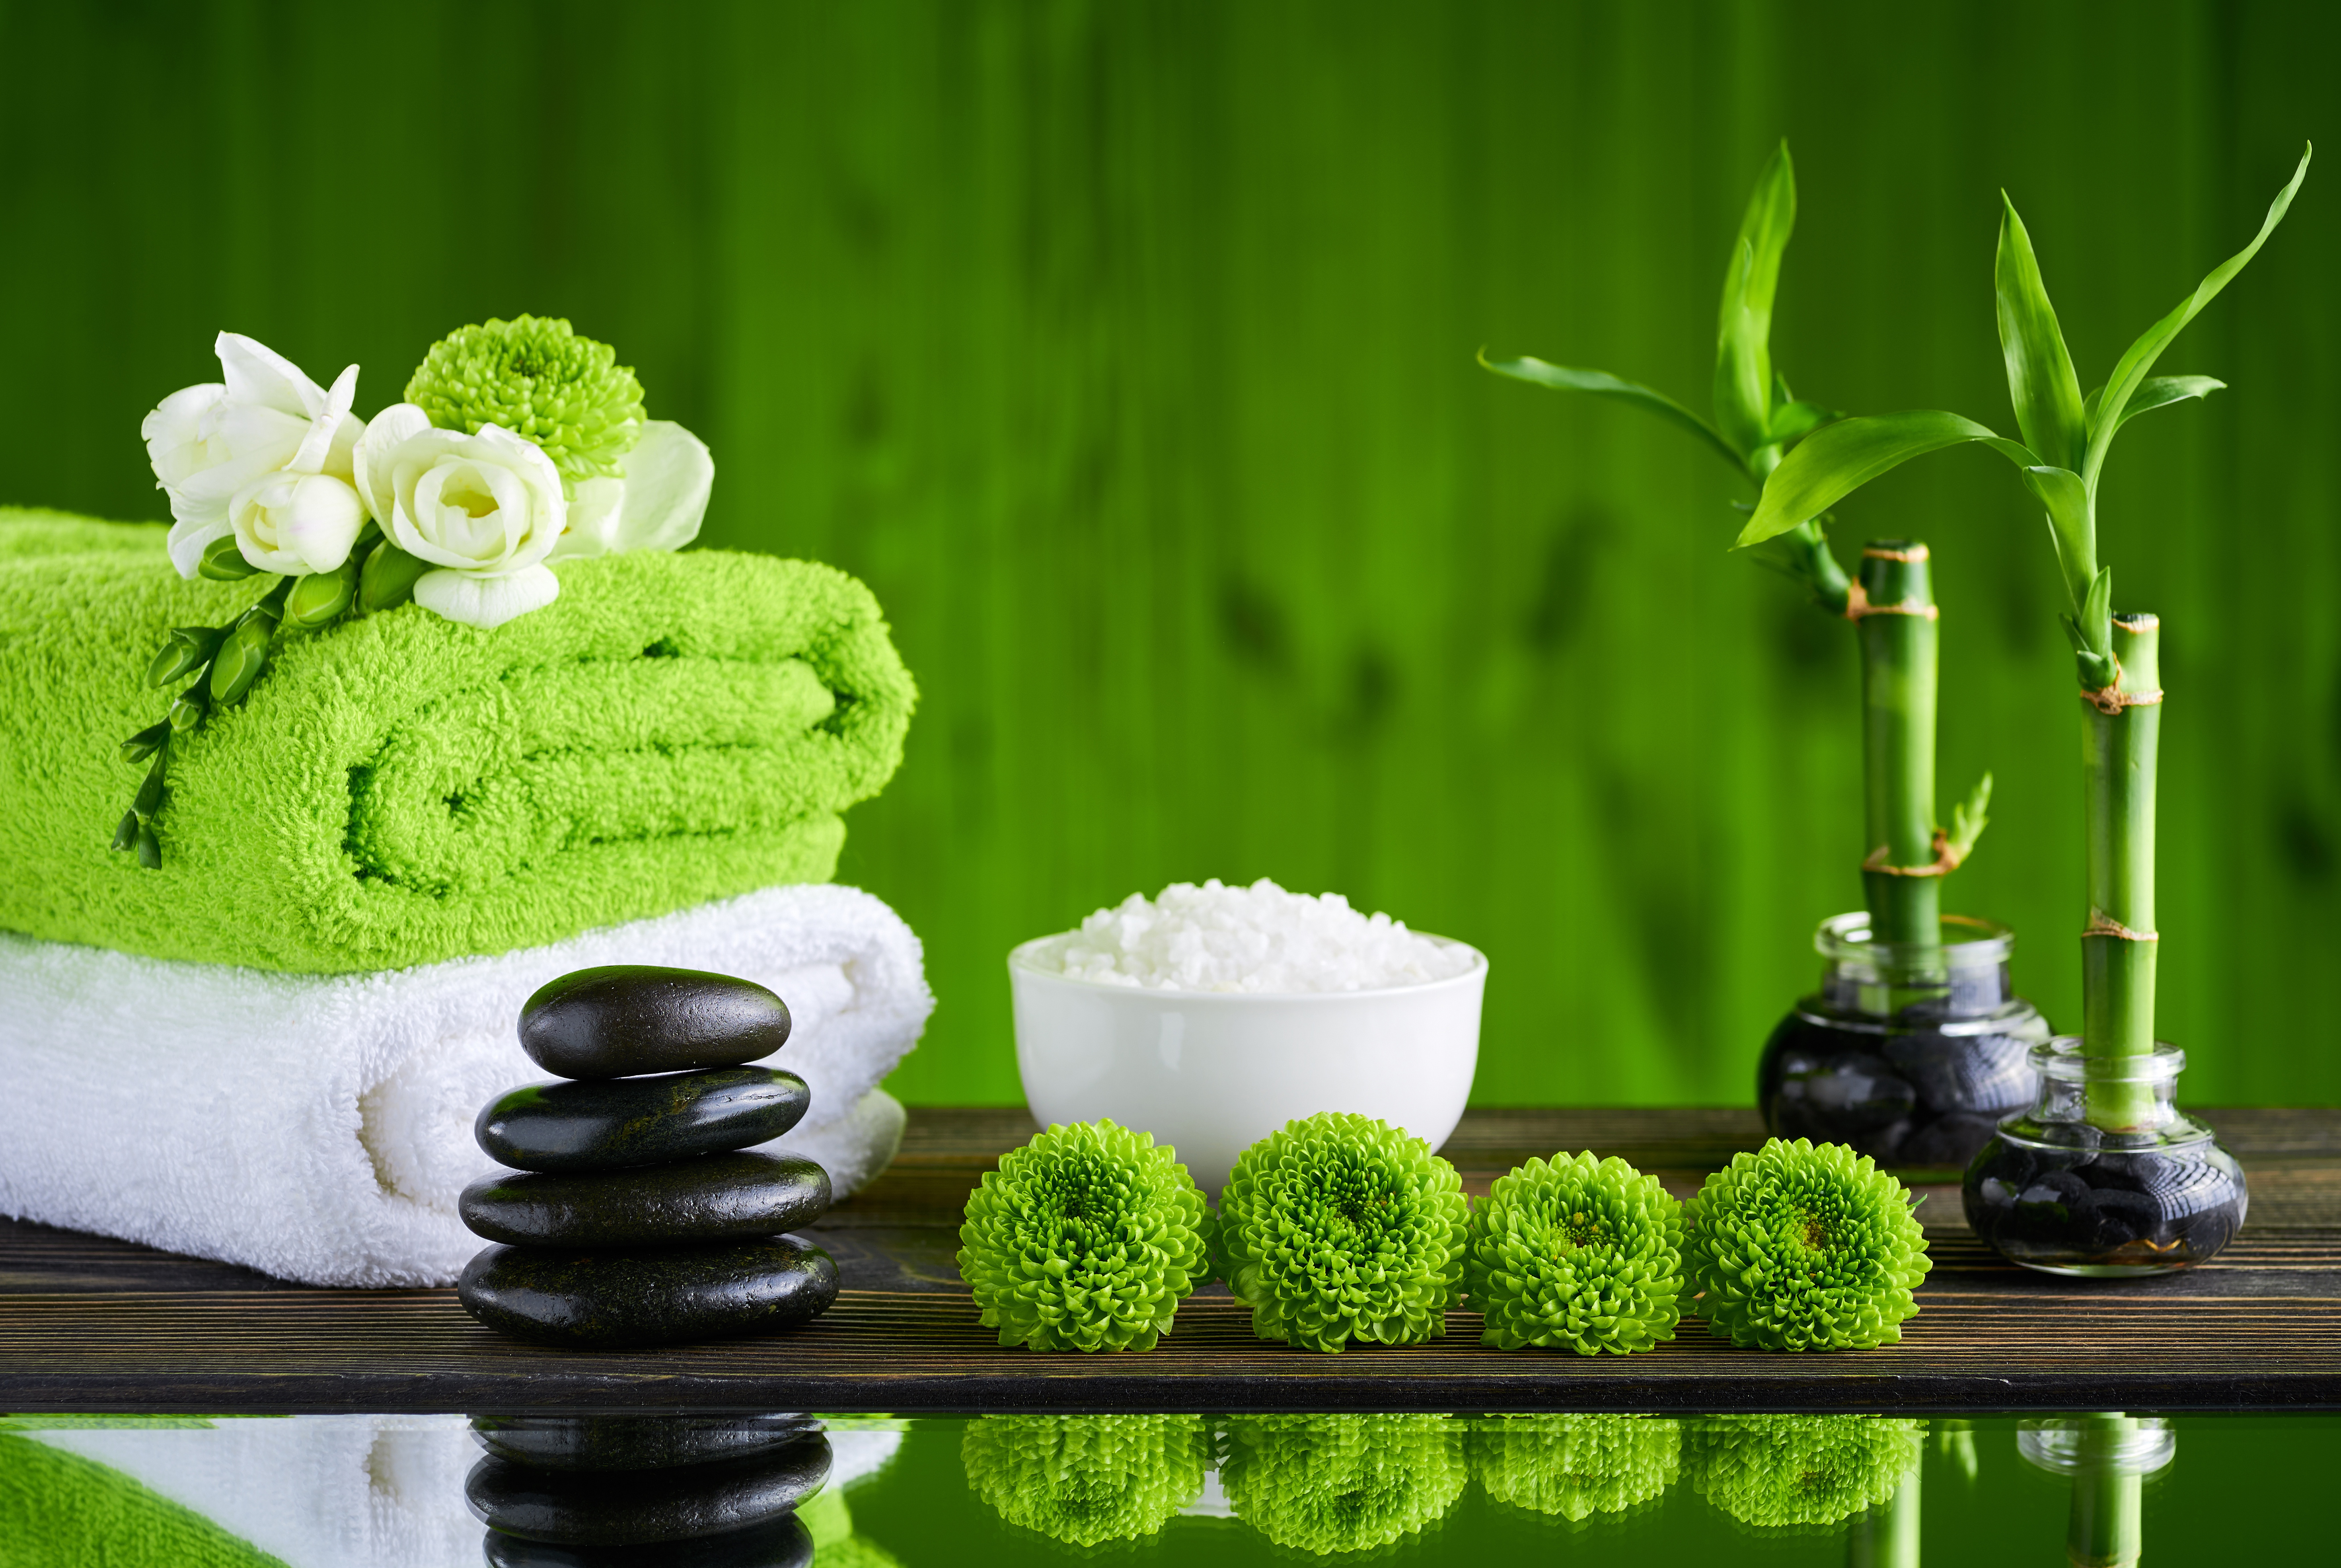 spa, white flower, bamboo, green, man made, reflection, stone, towel, zen cellphone